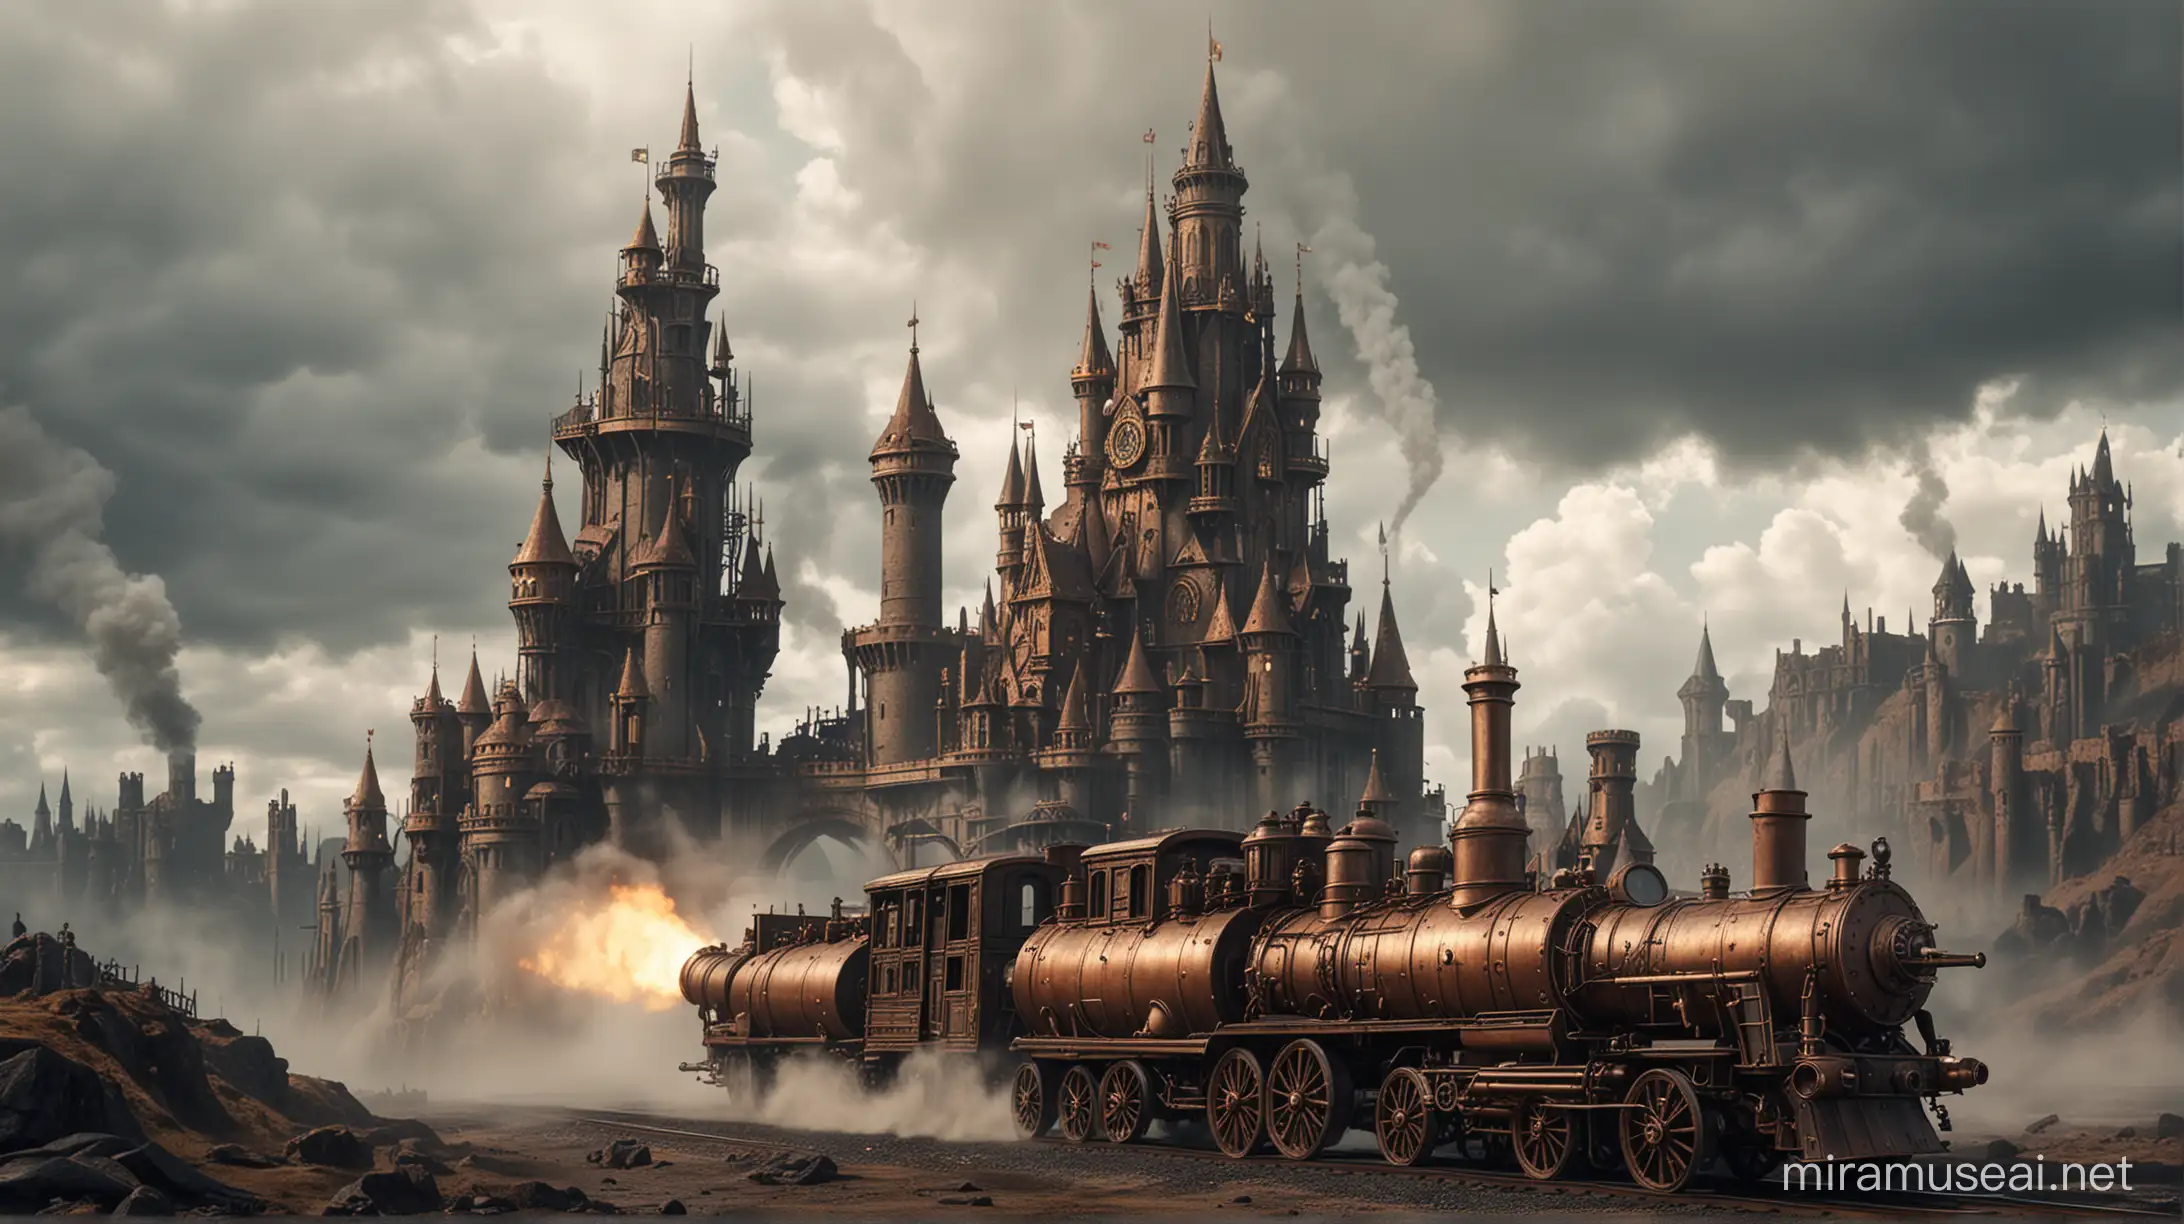 the column of steampunk vehicles runs towards a steampunk castle, copper, brass, gold, steel, steam, smoke, it gets dark, cloudy